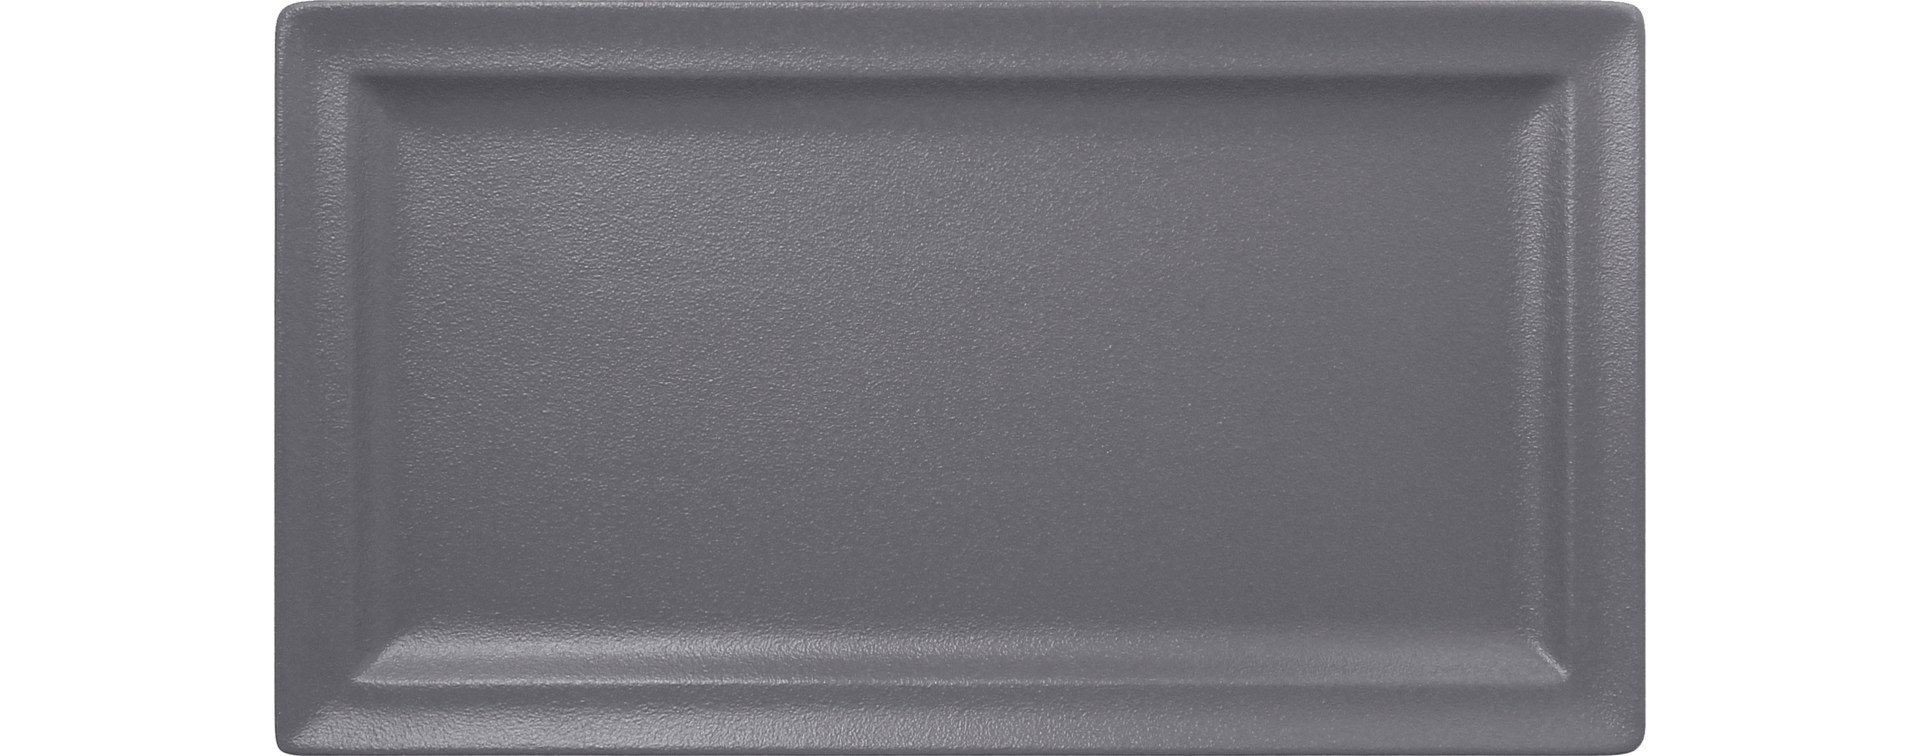 Neofusion, Teller flach rechteckig 380 x 210 mm stone